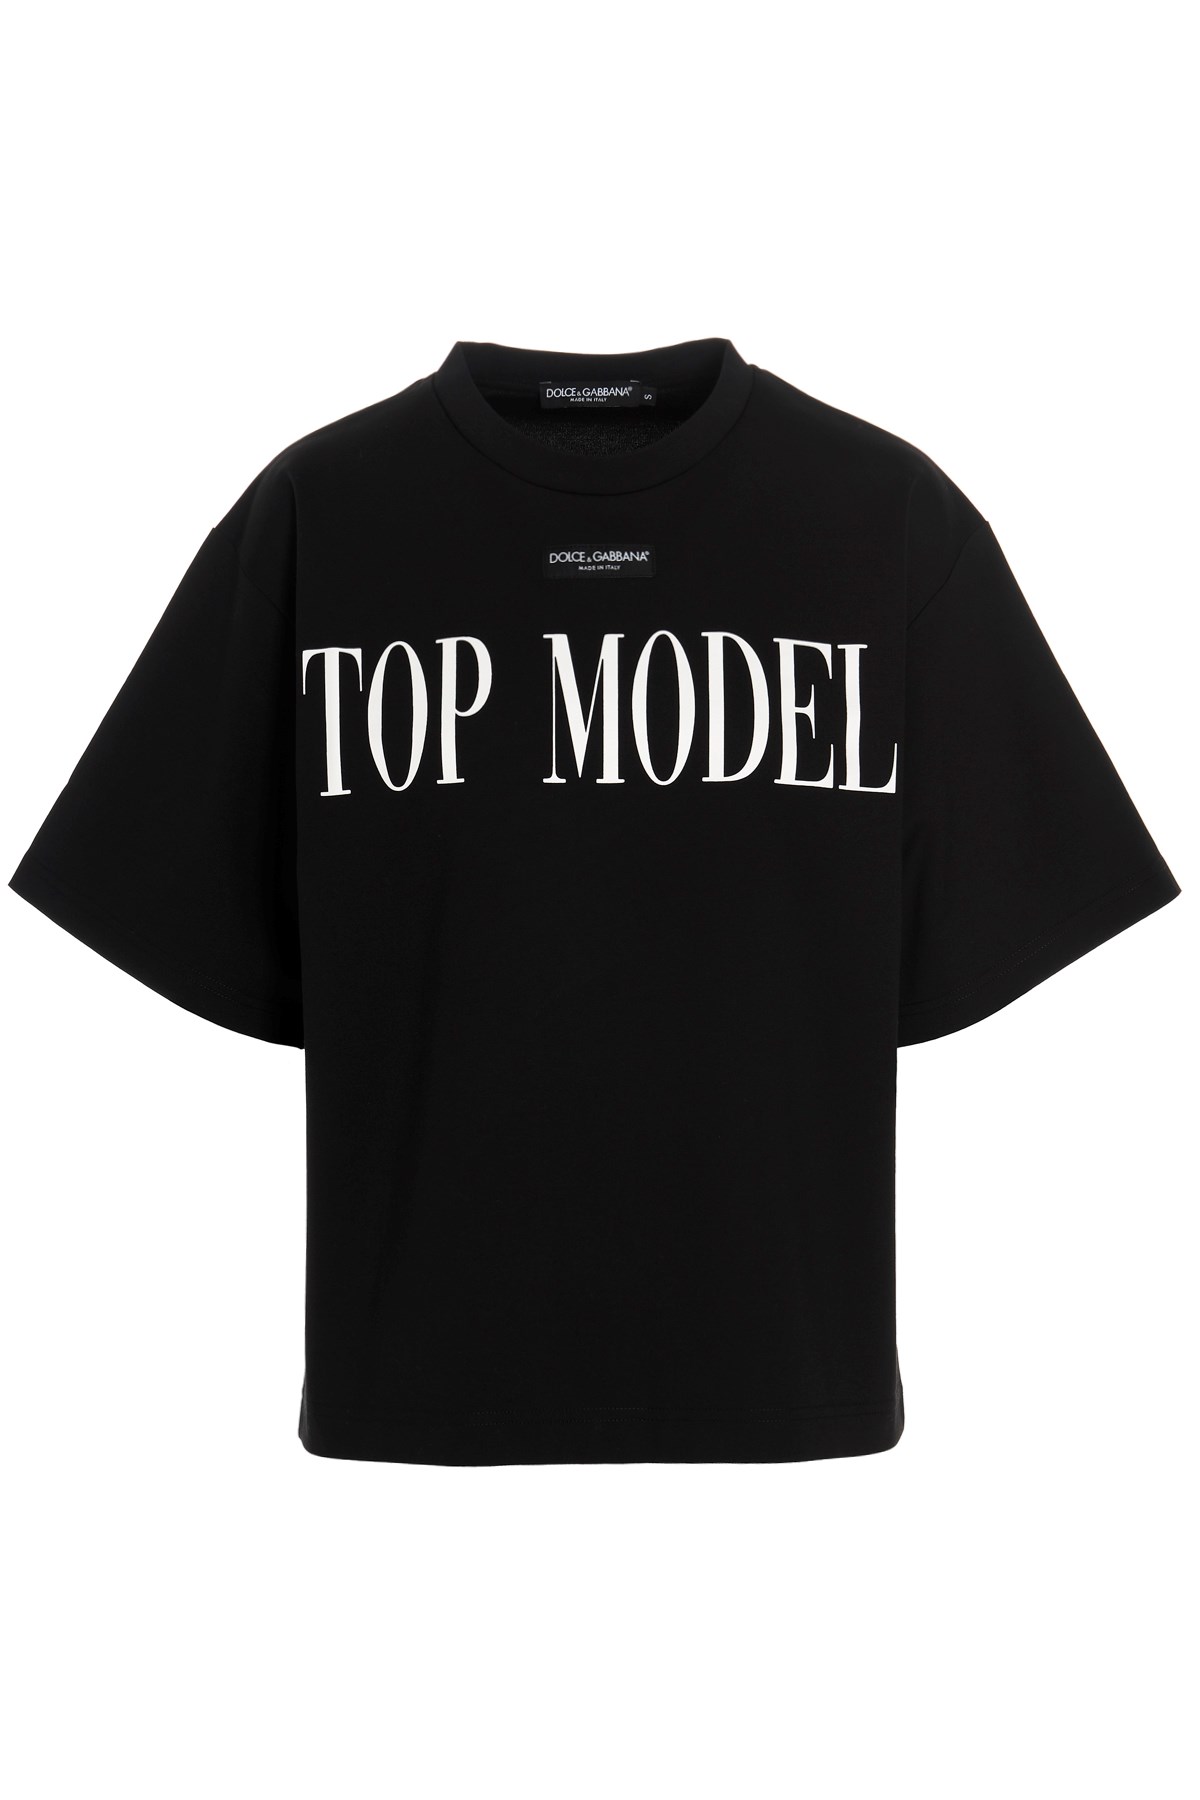 DOLCE & GABBANA 'Top Model’ T-Shirt